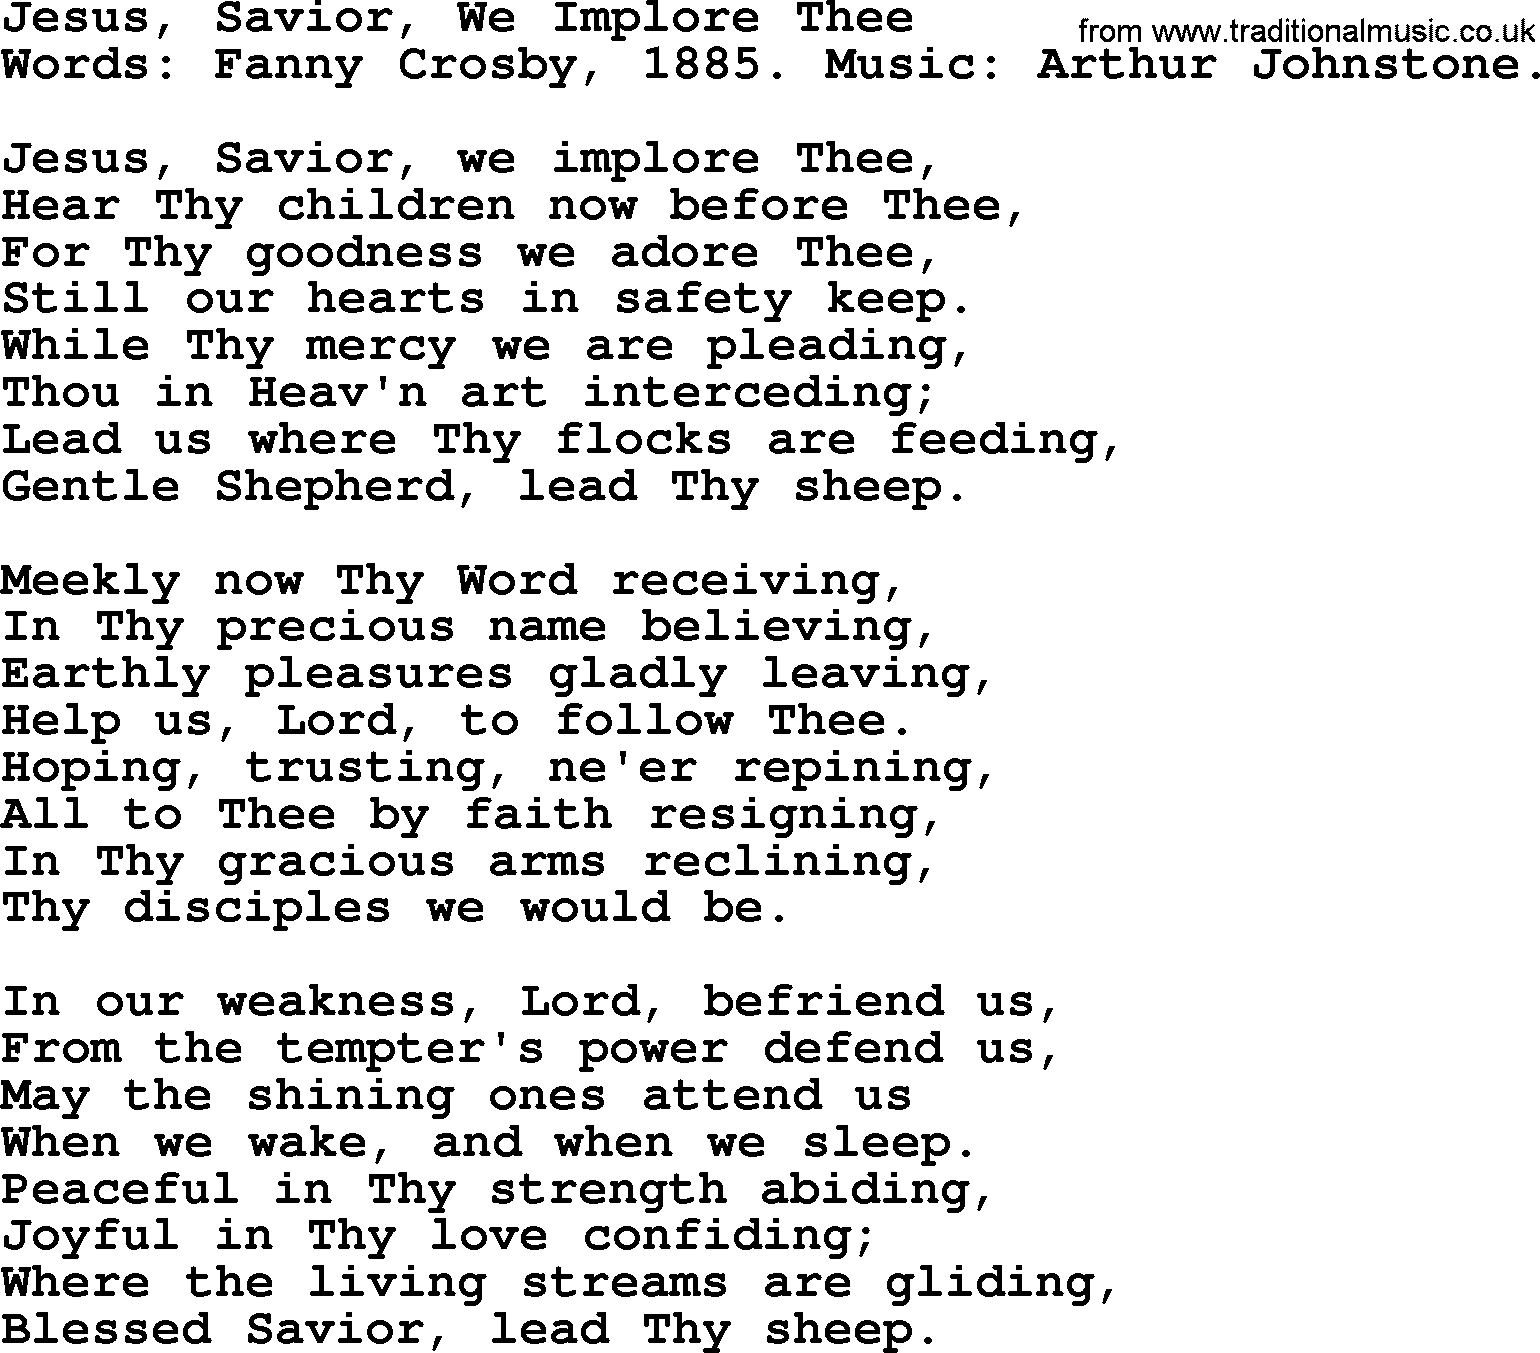 Fanny Crosby song: Jesus, Savior, We Implore Thee, lyrics